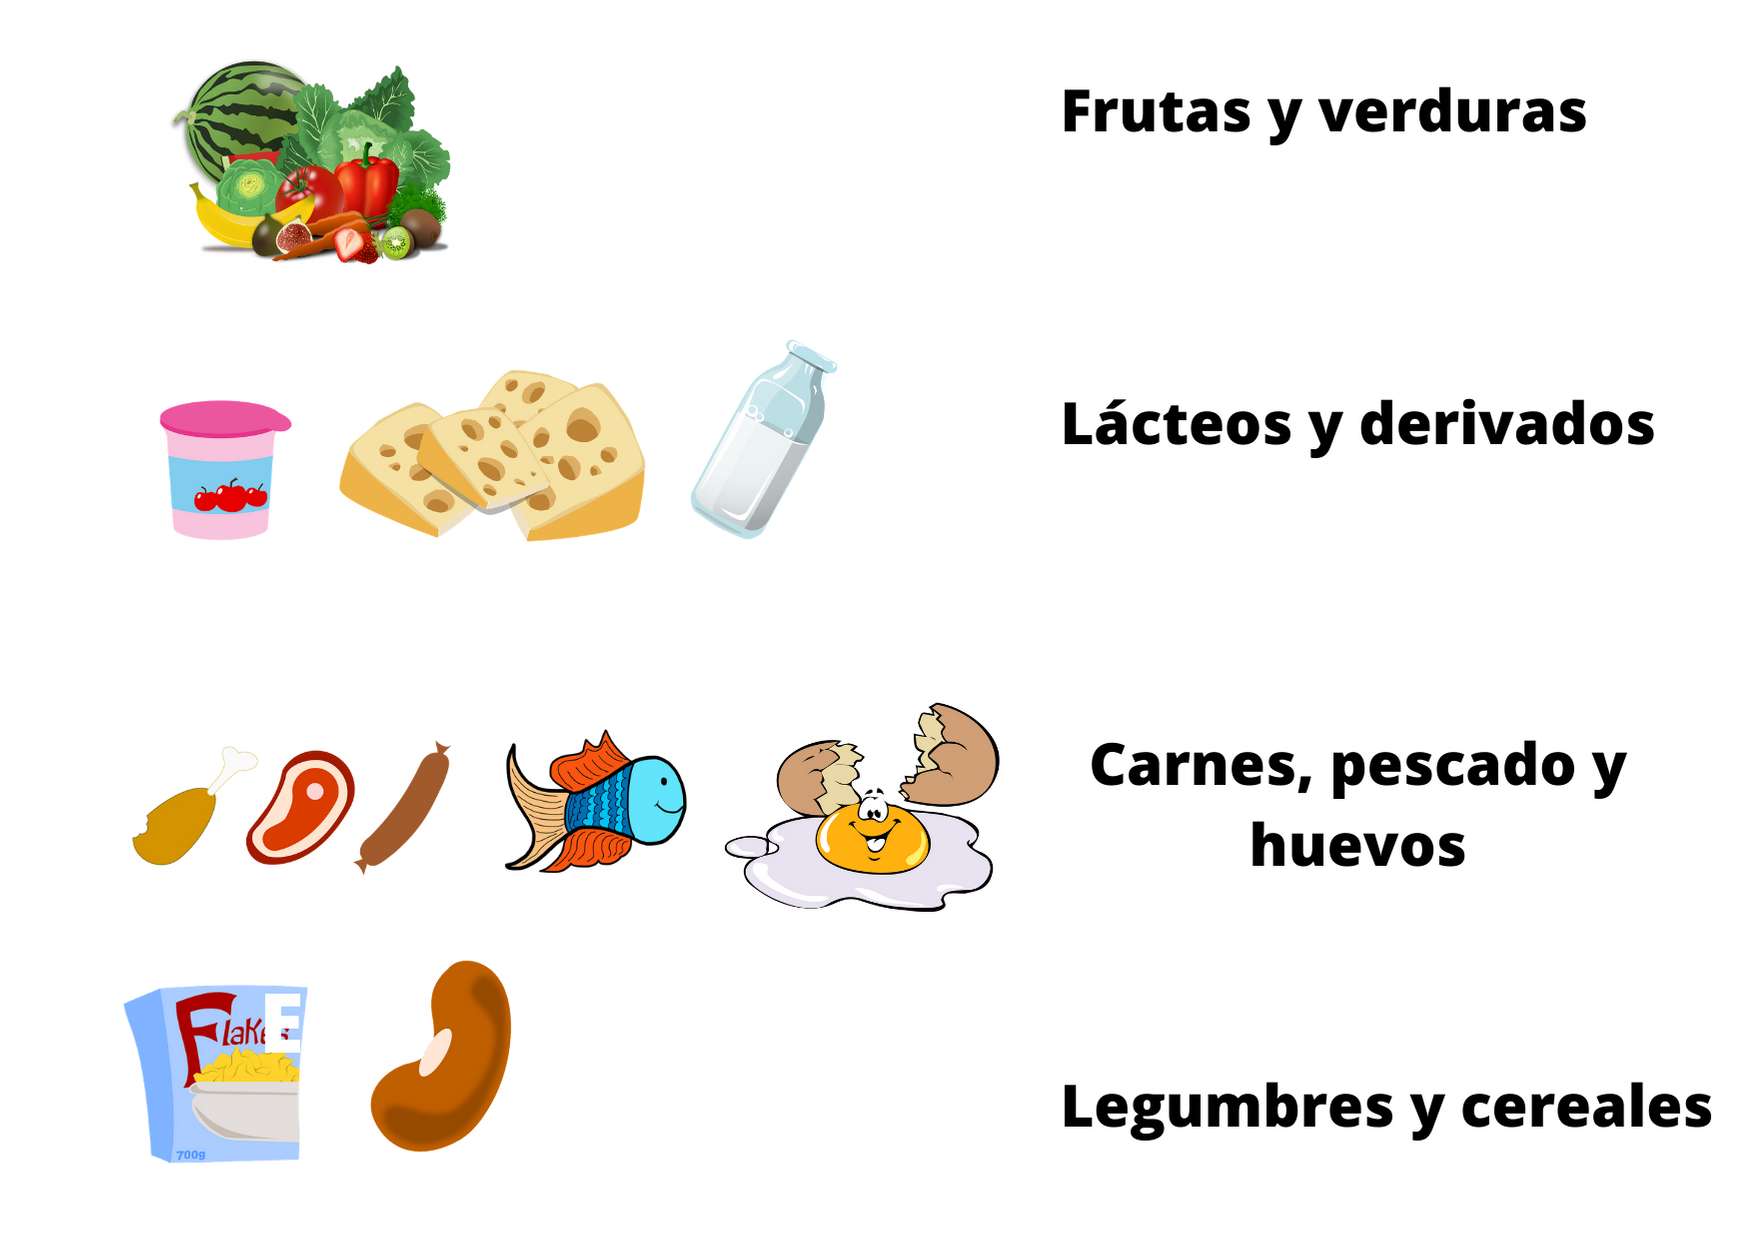 Imagen con distintos tipos de alimentos